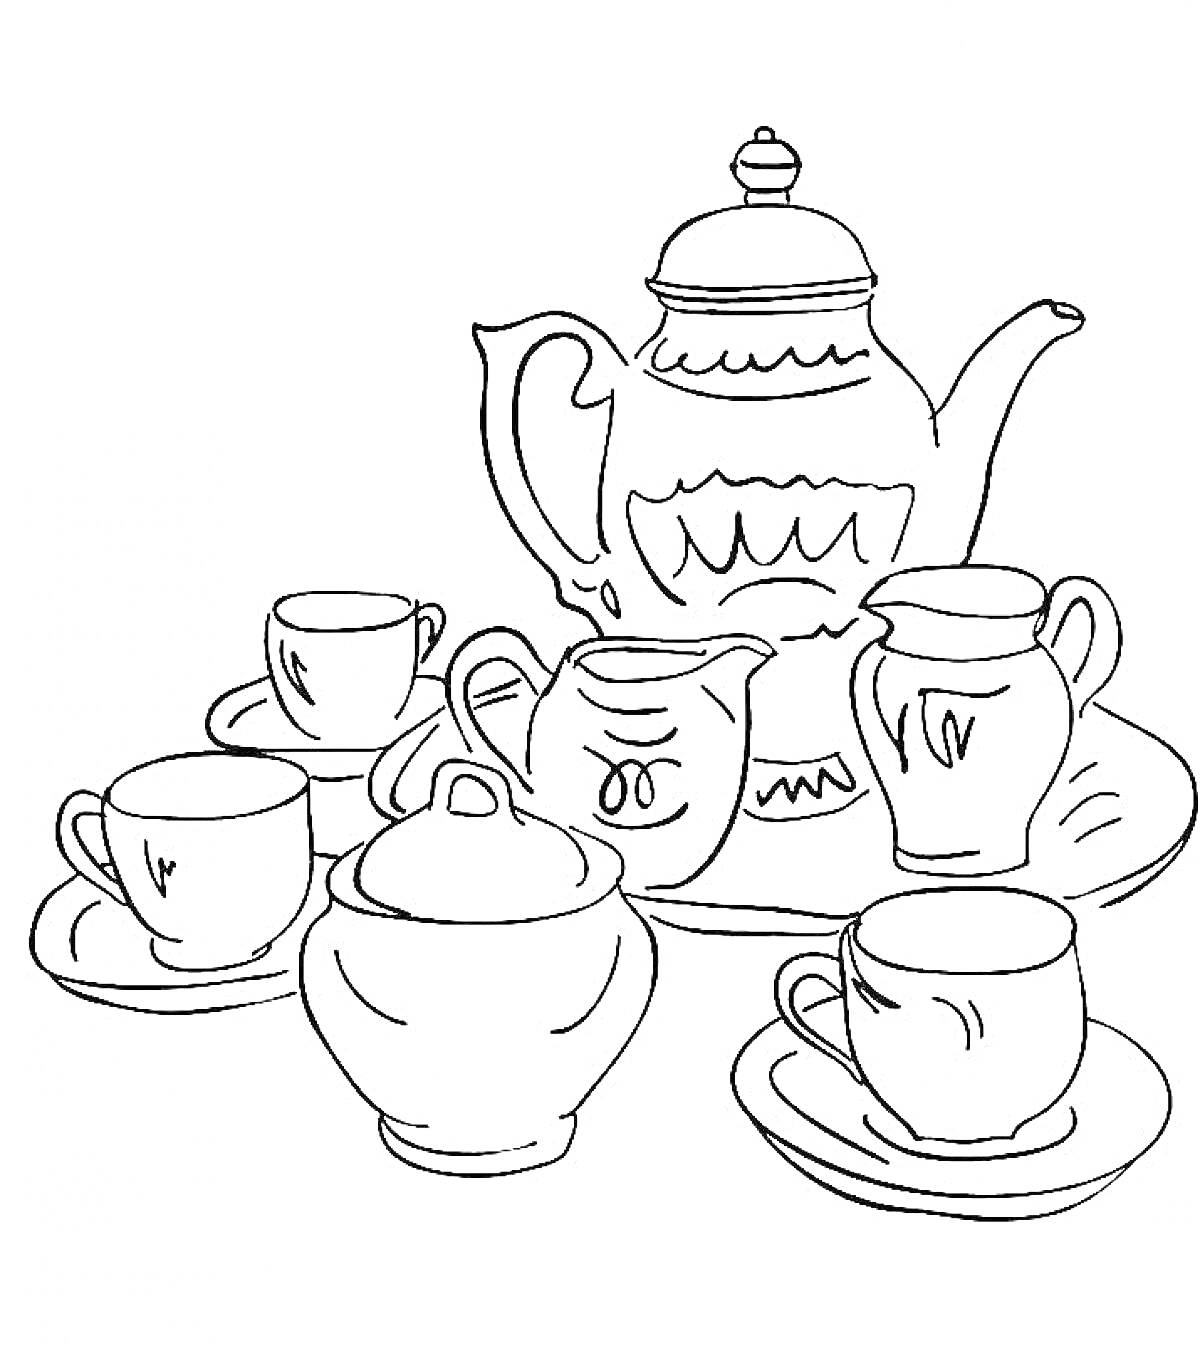 Раскраска Набор посуды: чайник, четыре чашки с блюдцами, сахарница, два молочника